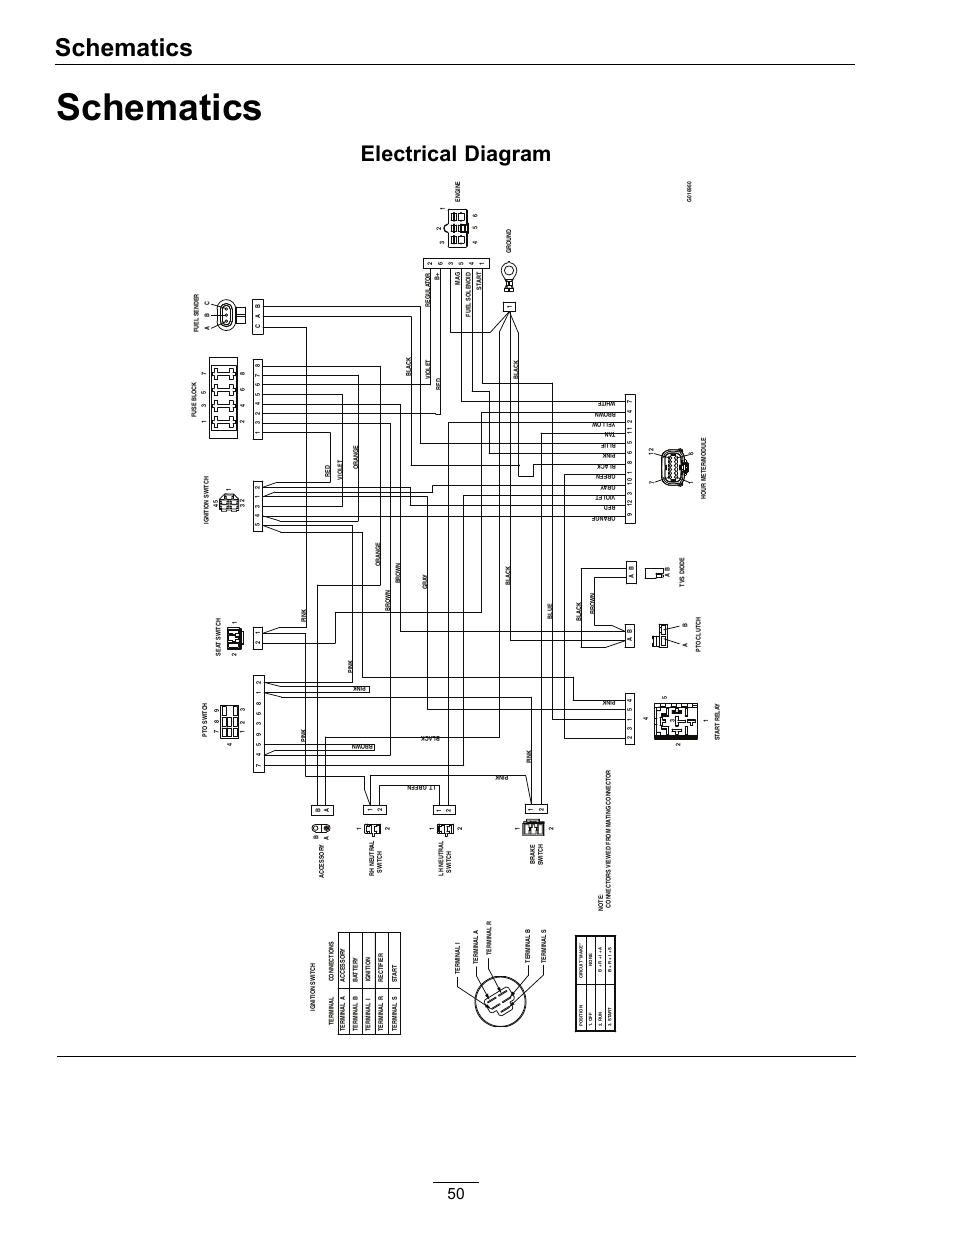 lowrance gps antenna wiring diagram